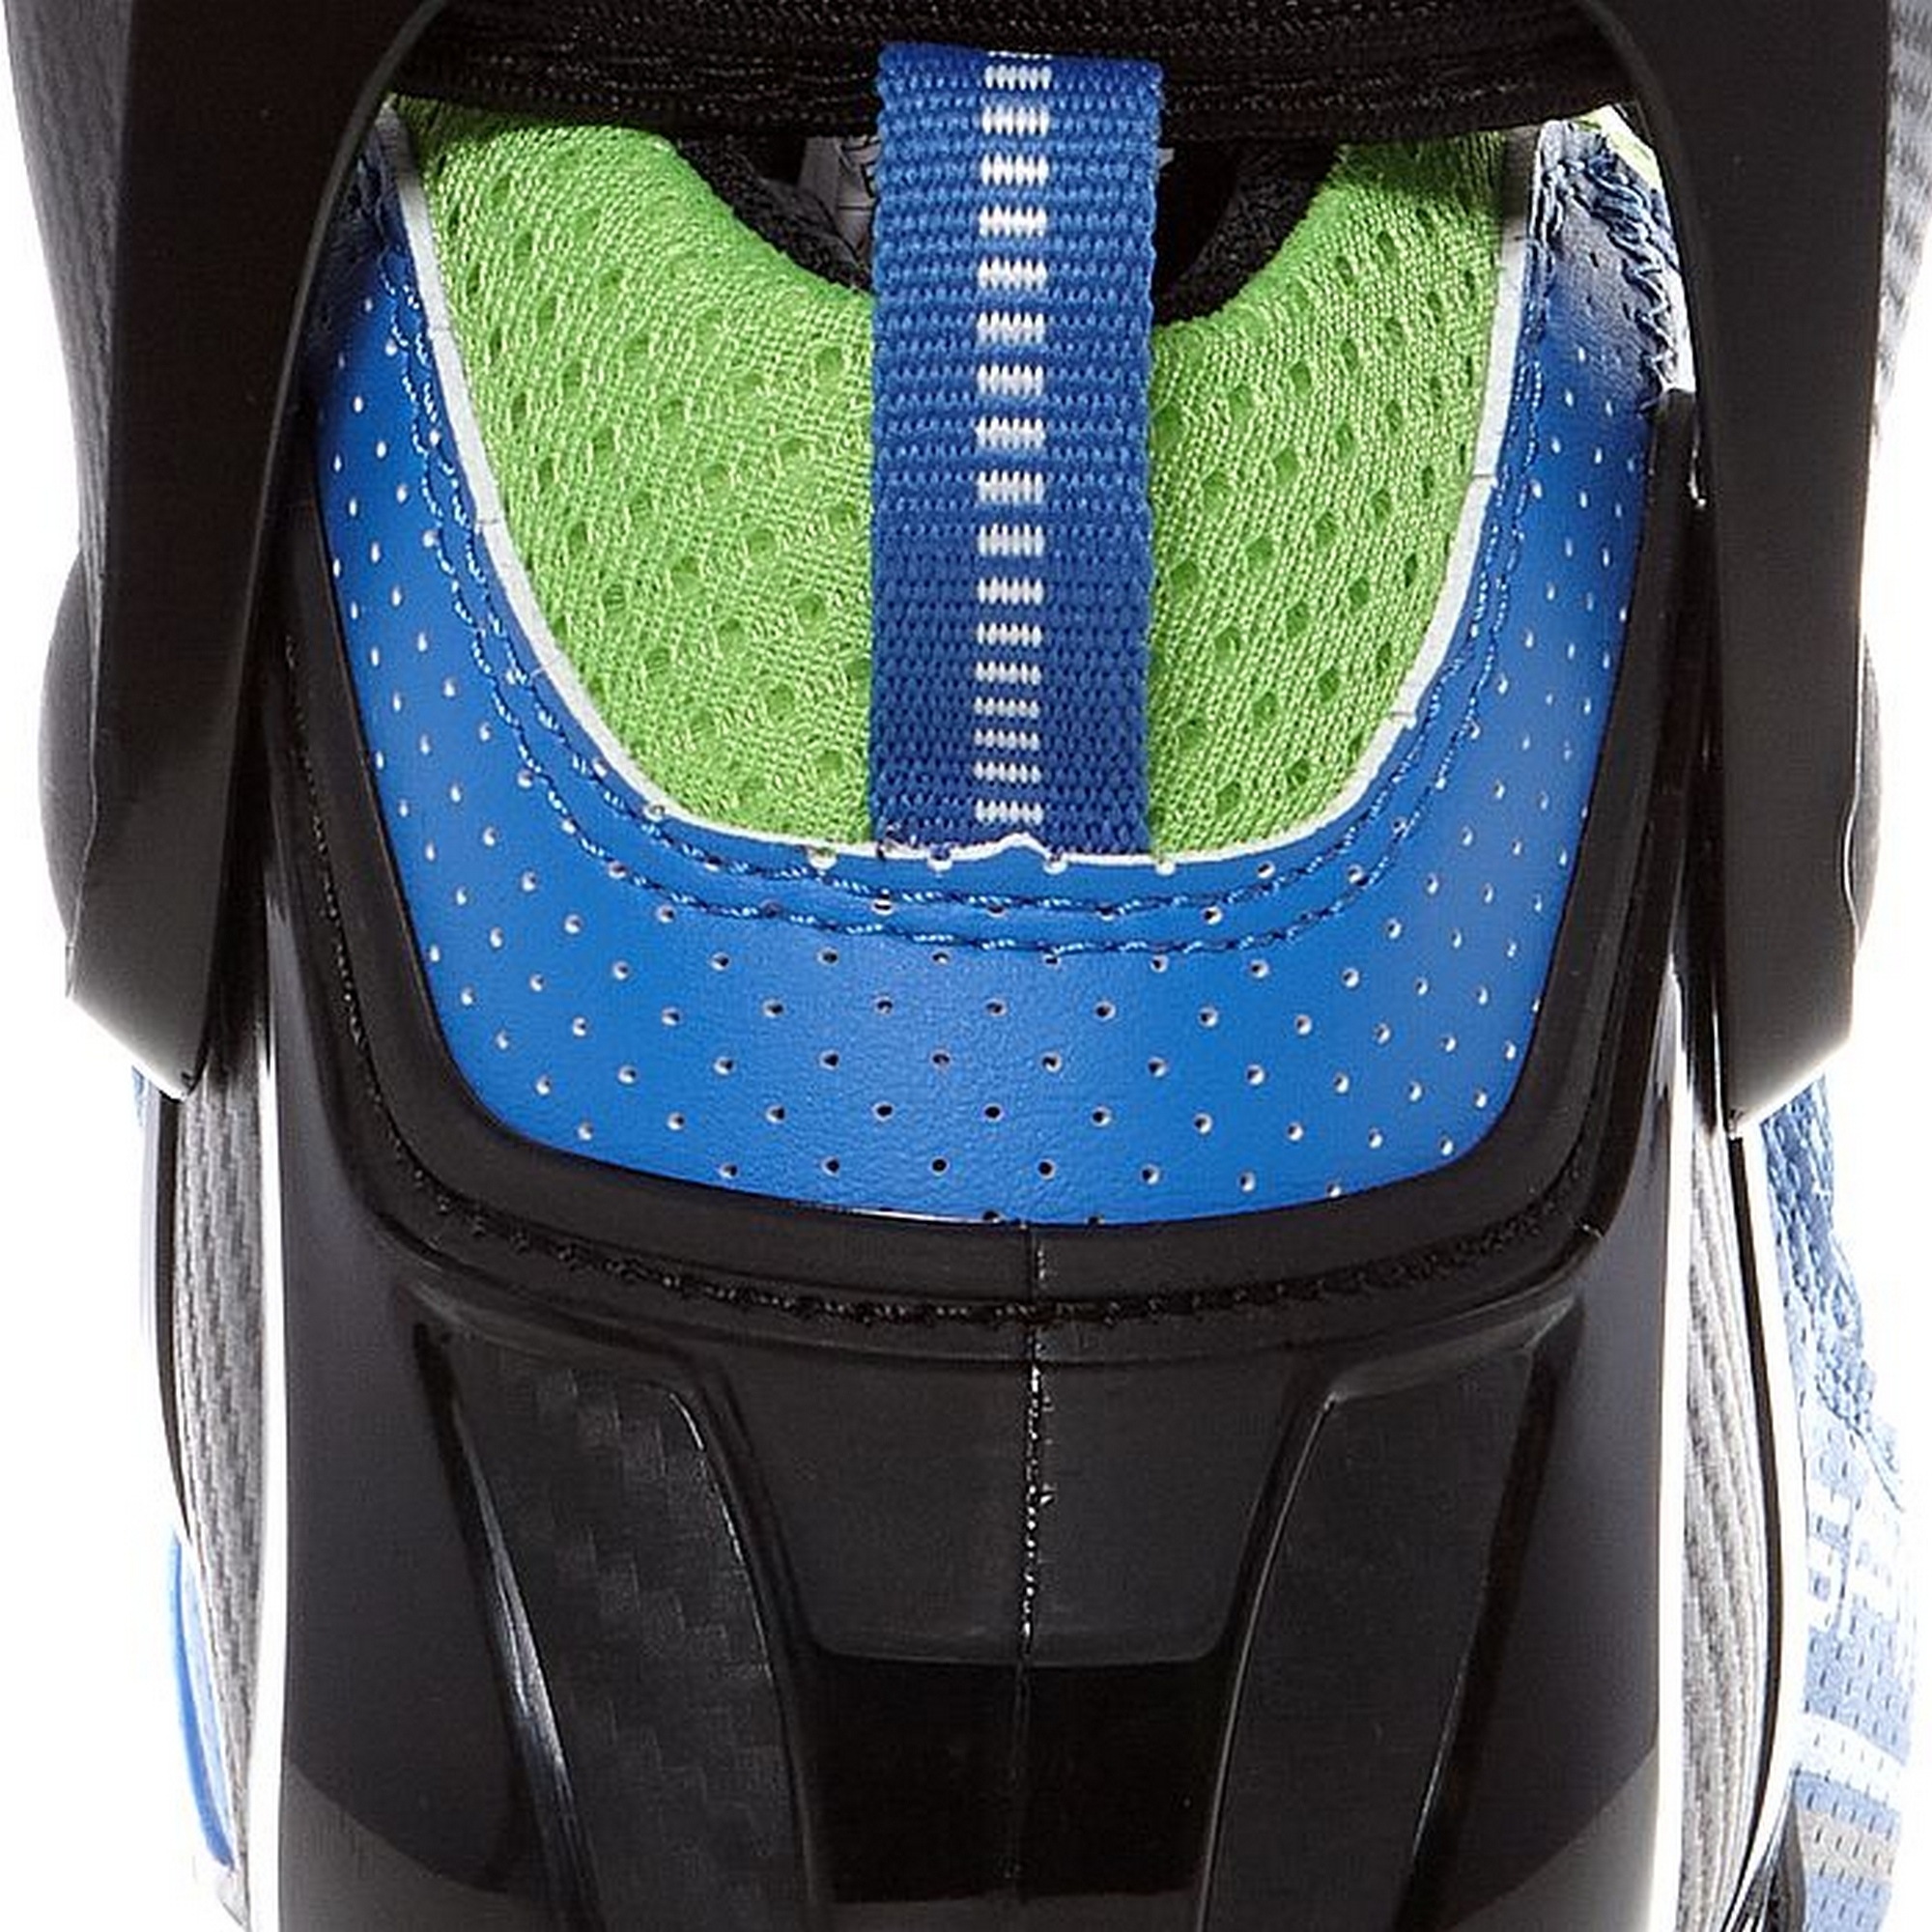 Лыжероллерные ботинки Spine NNN Concept Skiroll Skate 17/1-21 черный\синий 2000_2000